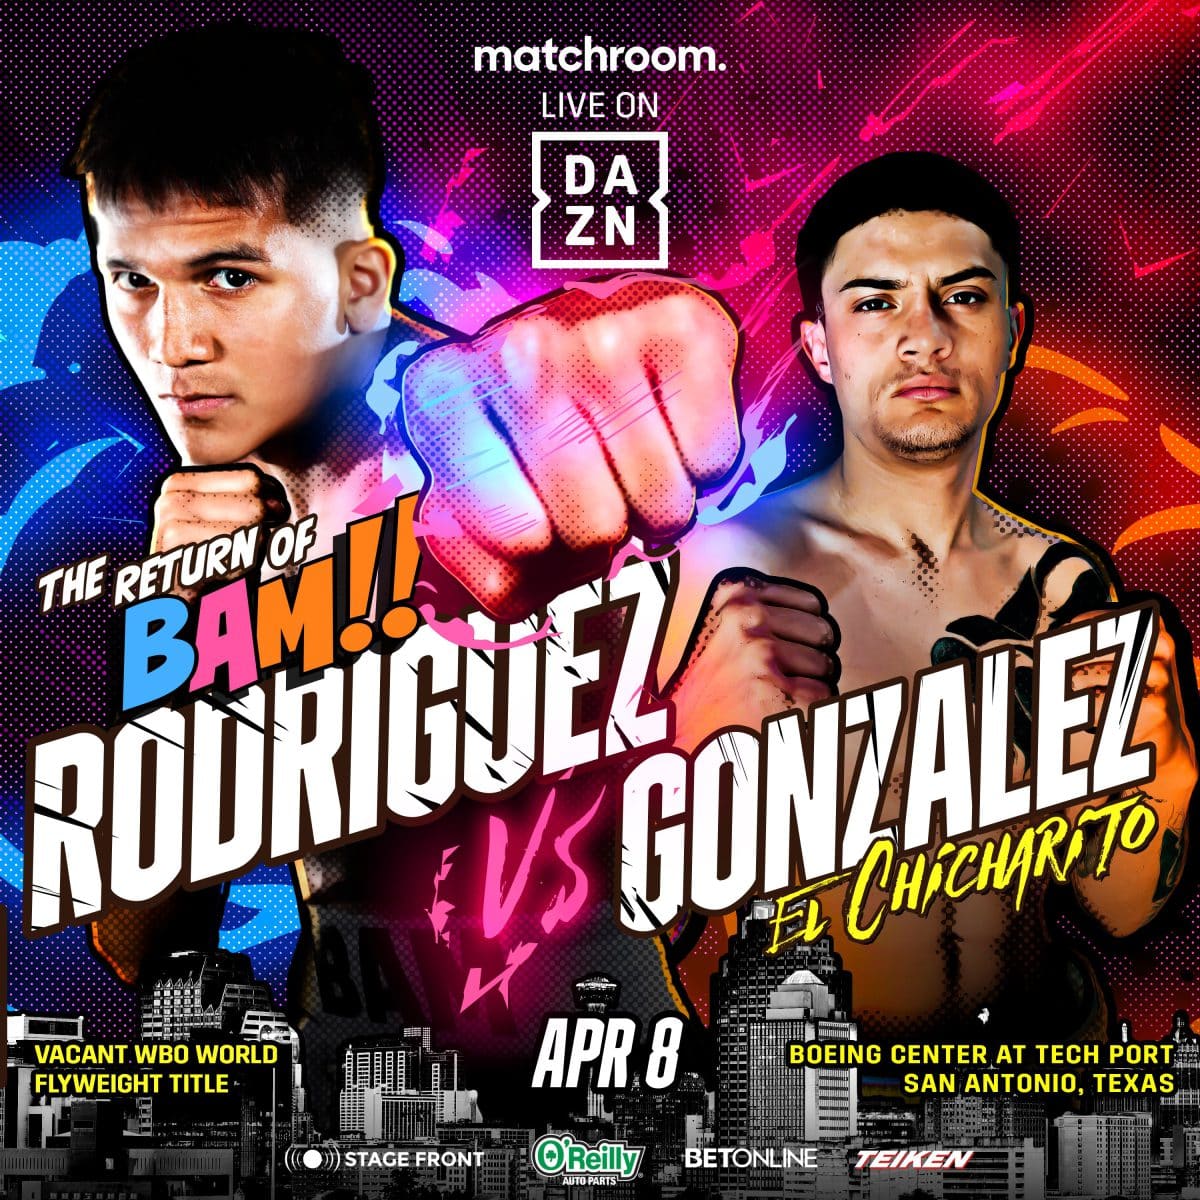 Image: Jesse ‘Bam’ Rodriguez vs. Cristian Gonzalez on April 8th in San Antonio, TX